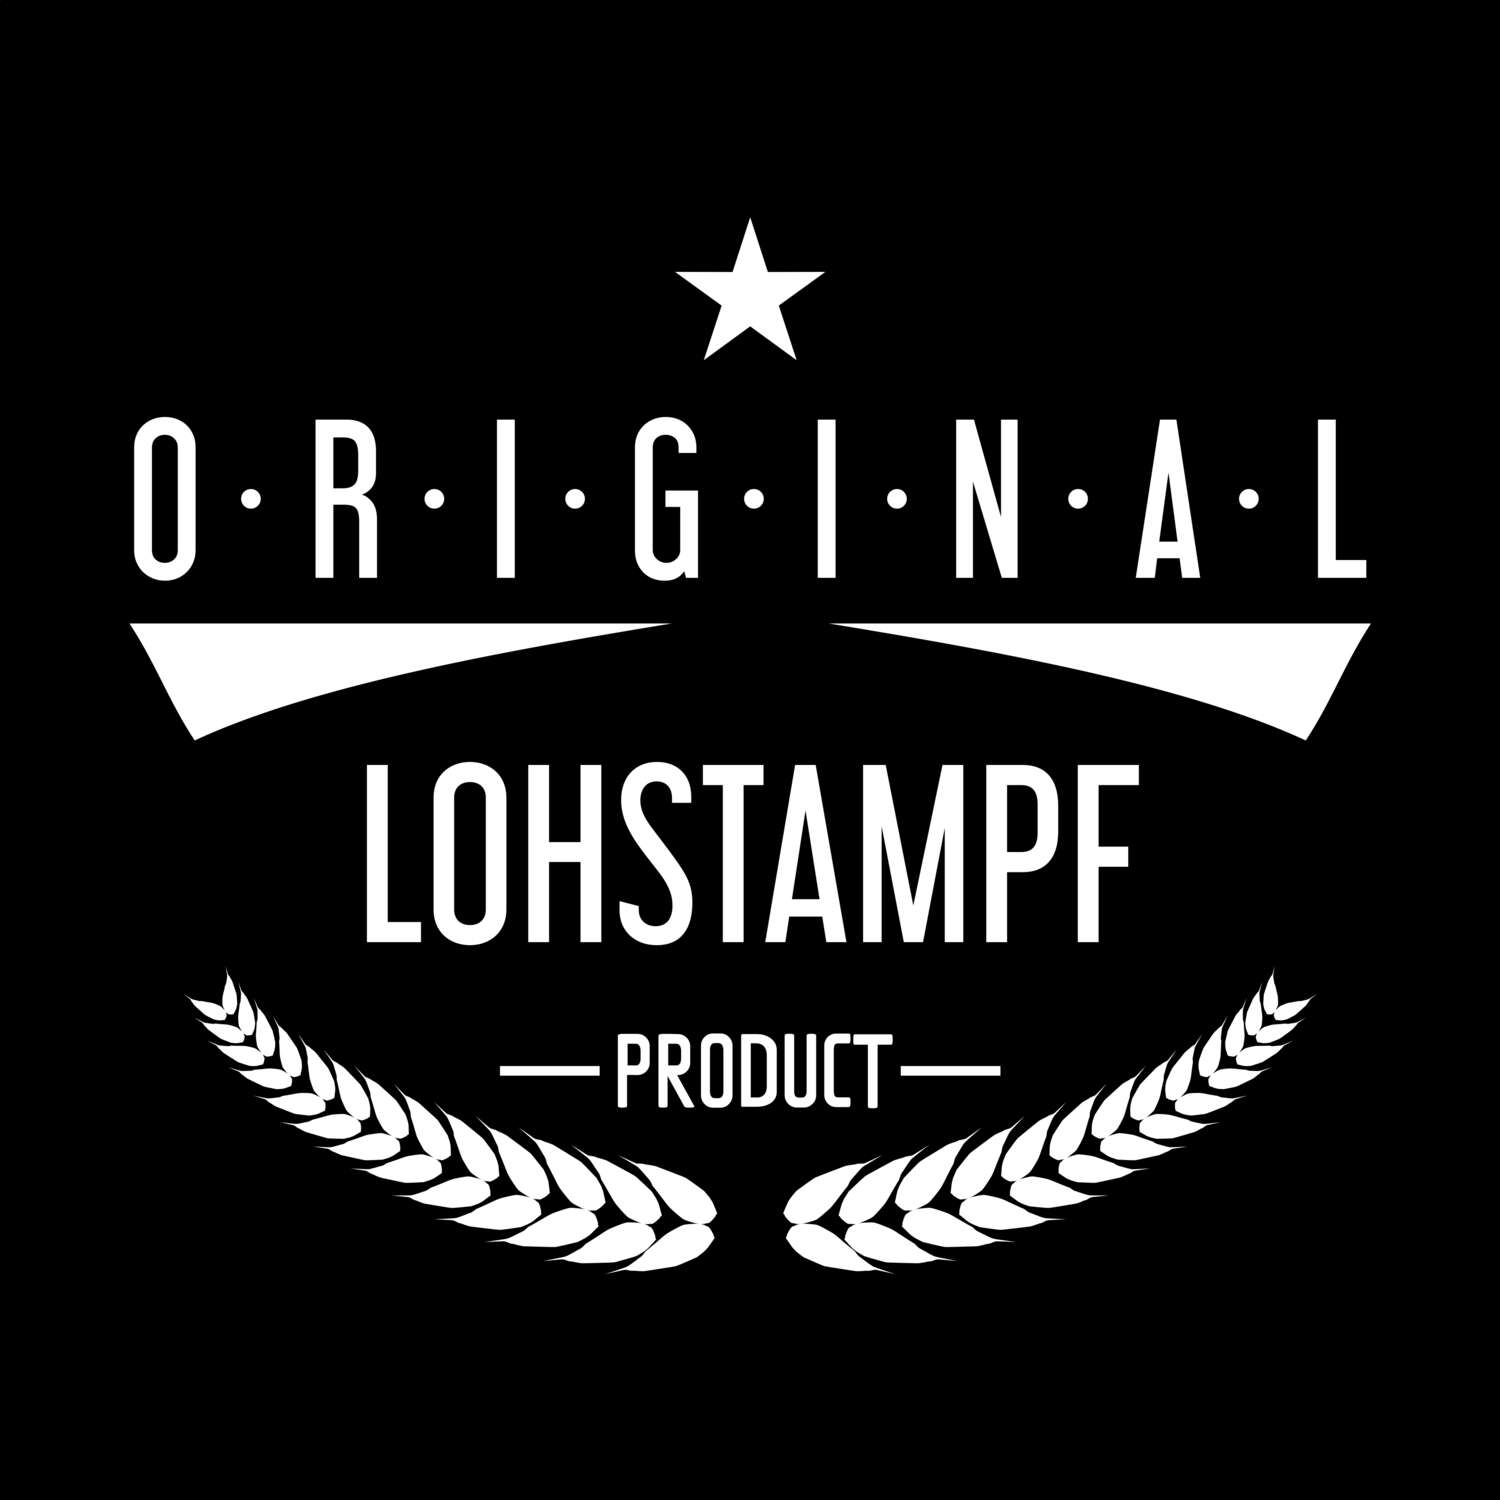 Lohstampf T-Shirt »Original Product«